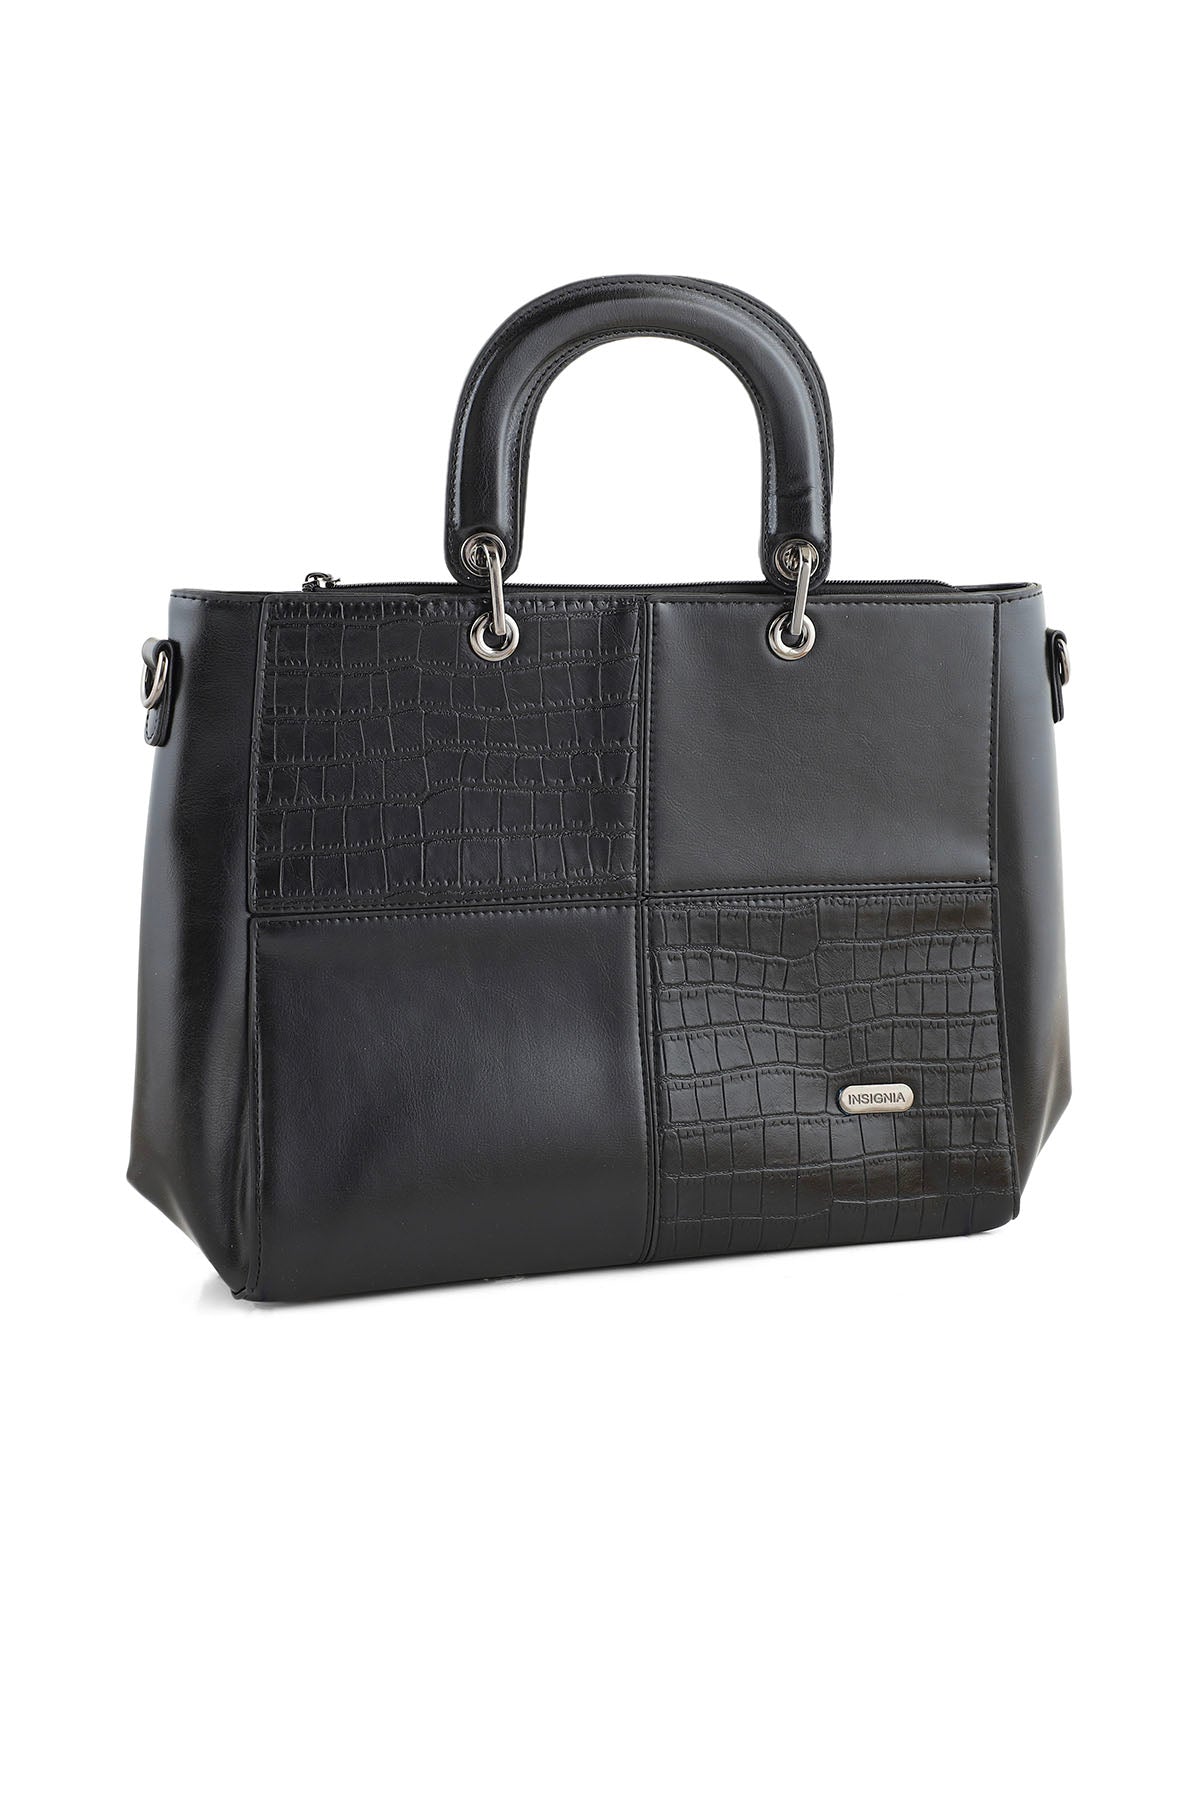 Top Handle Hand Bags B14979-Black